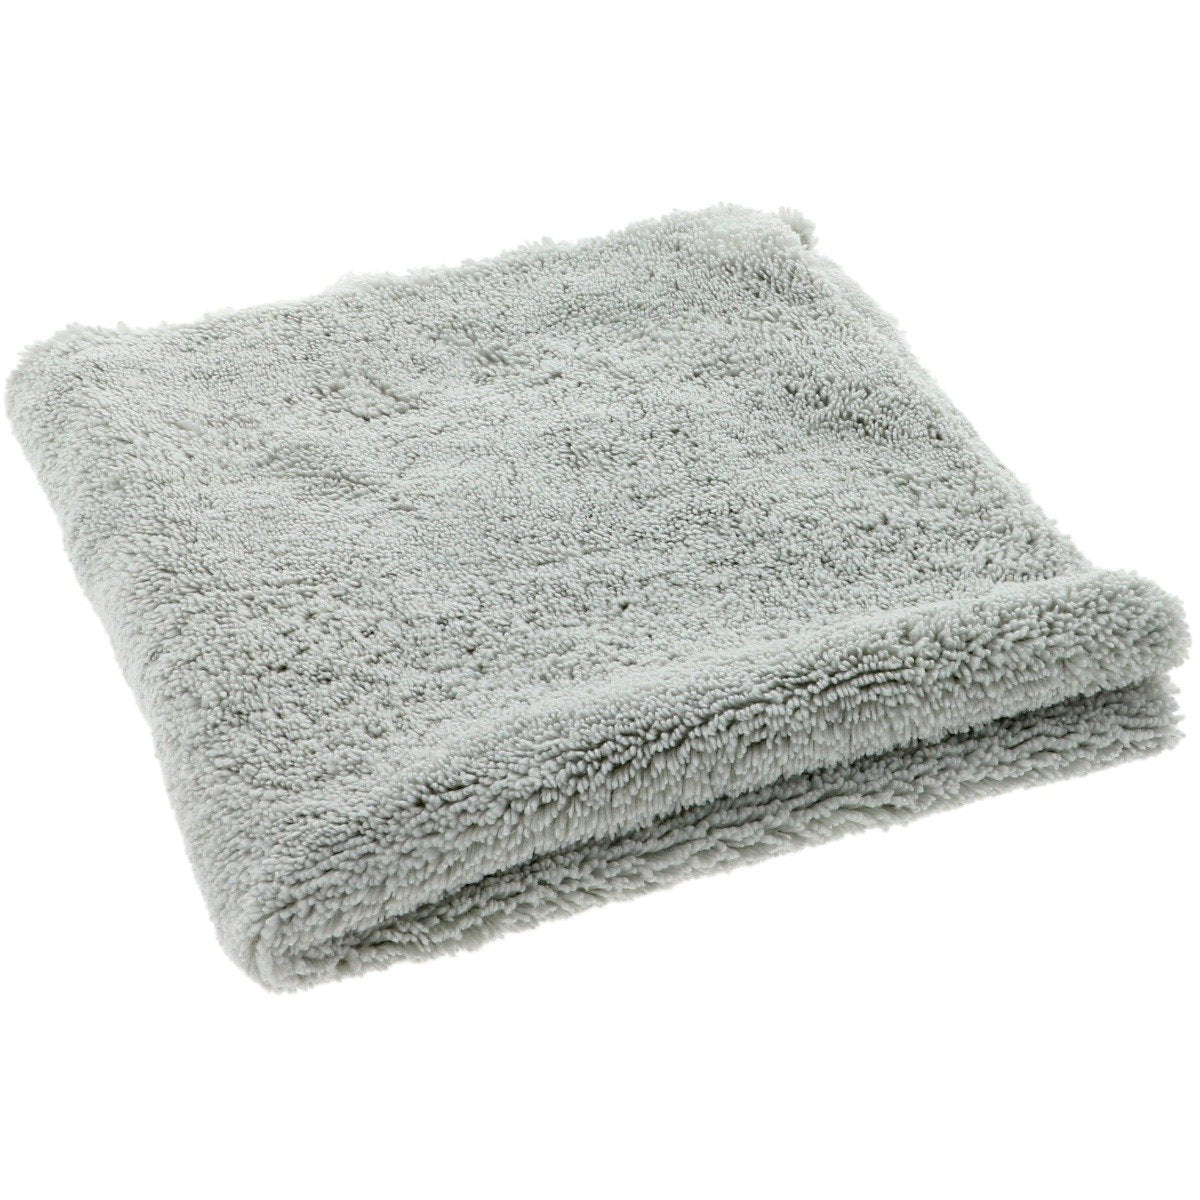 Creature edgeless - Dual Pile Microfiber Towel